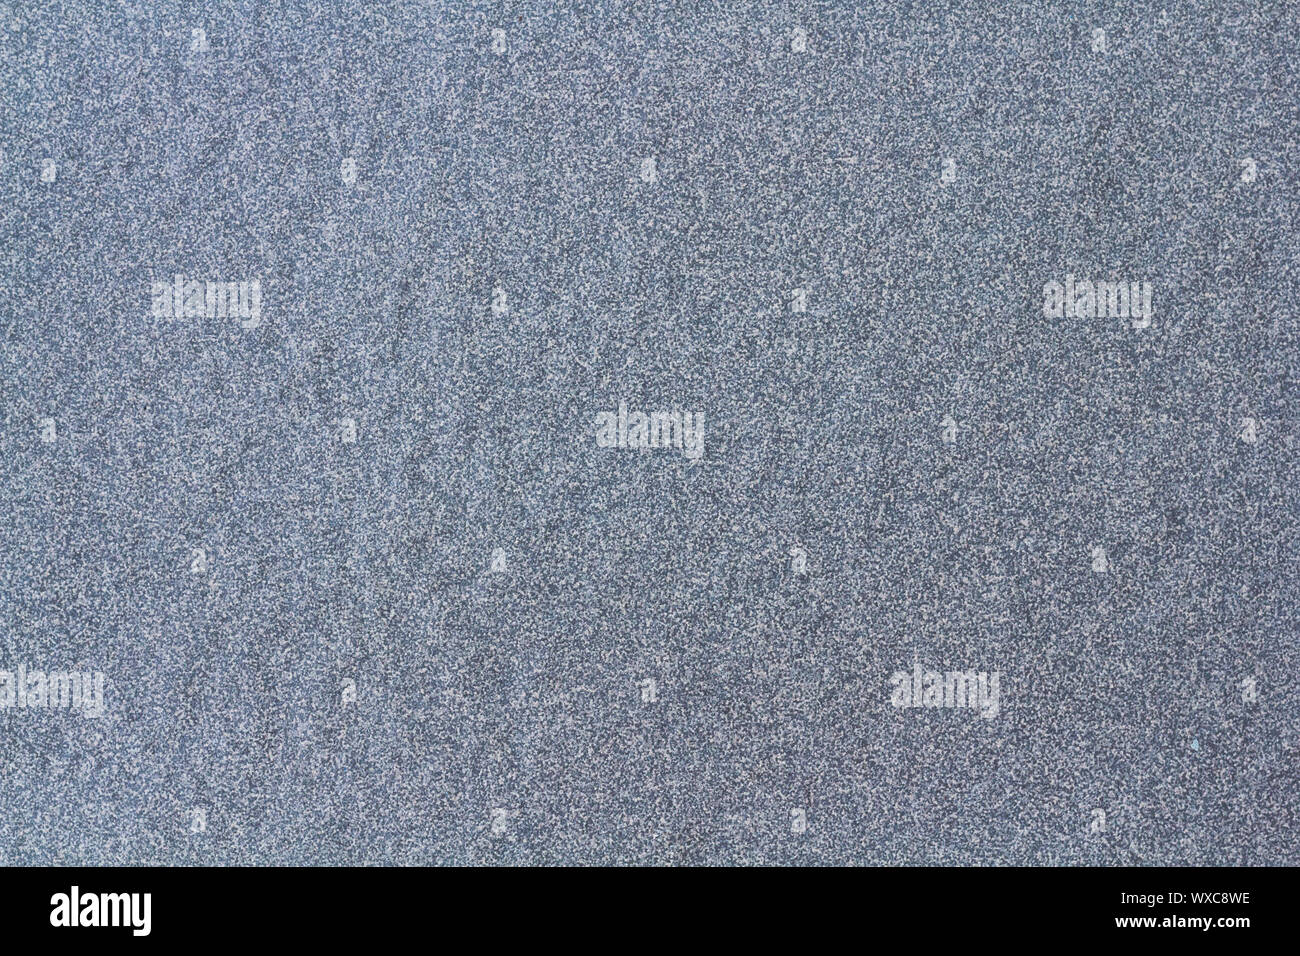 Gray granite seamless texture background, vintage and retro style Stock Photo